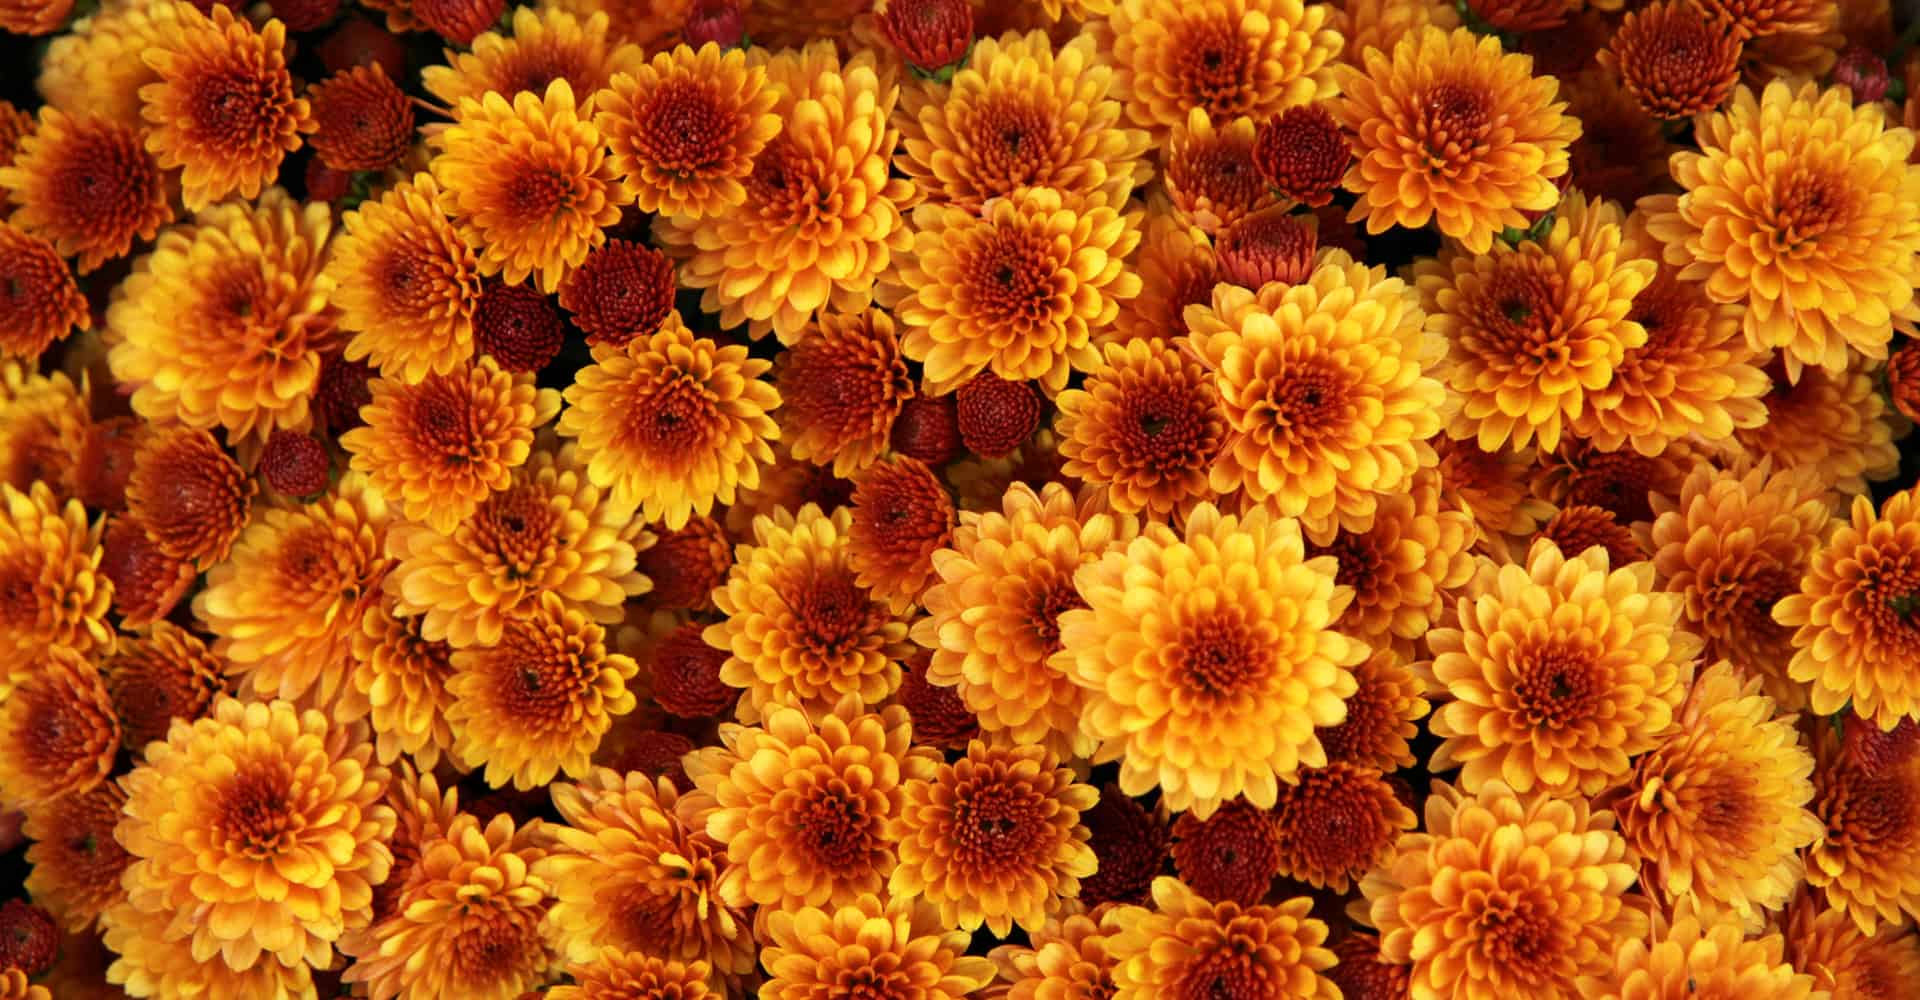 Chrysanthemum Care Guide: How To Grow Chrysanthemum | DIY Garden